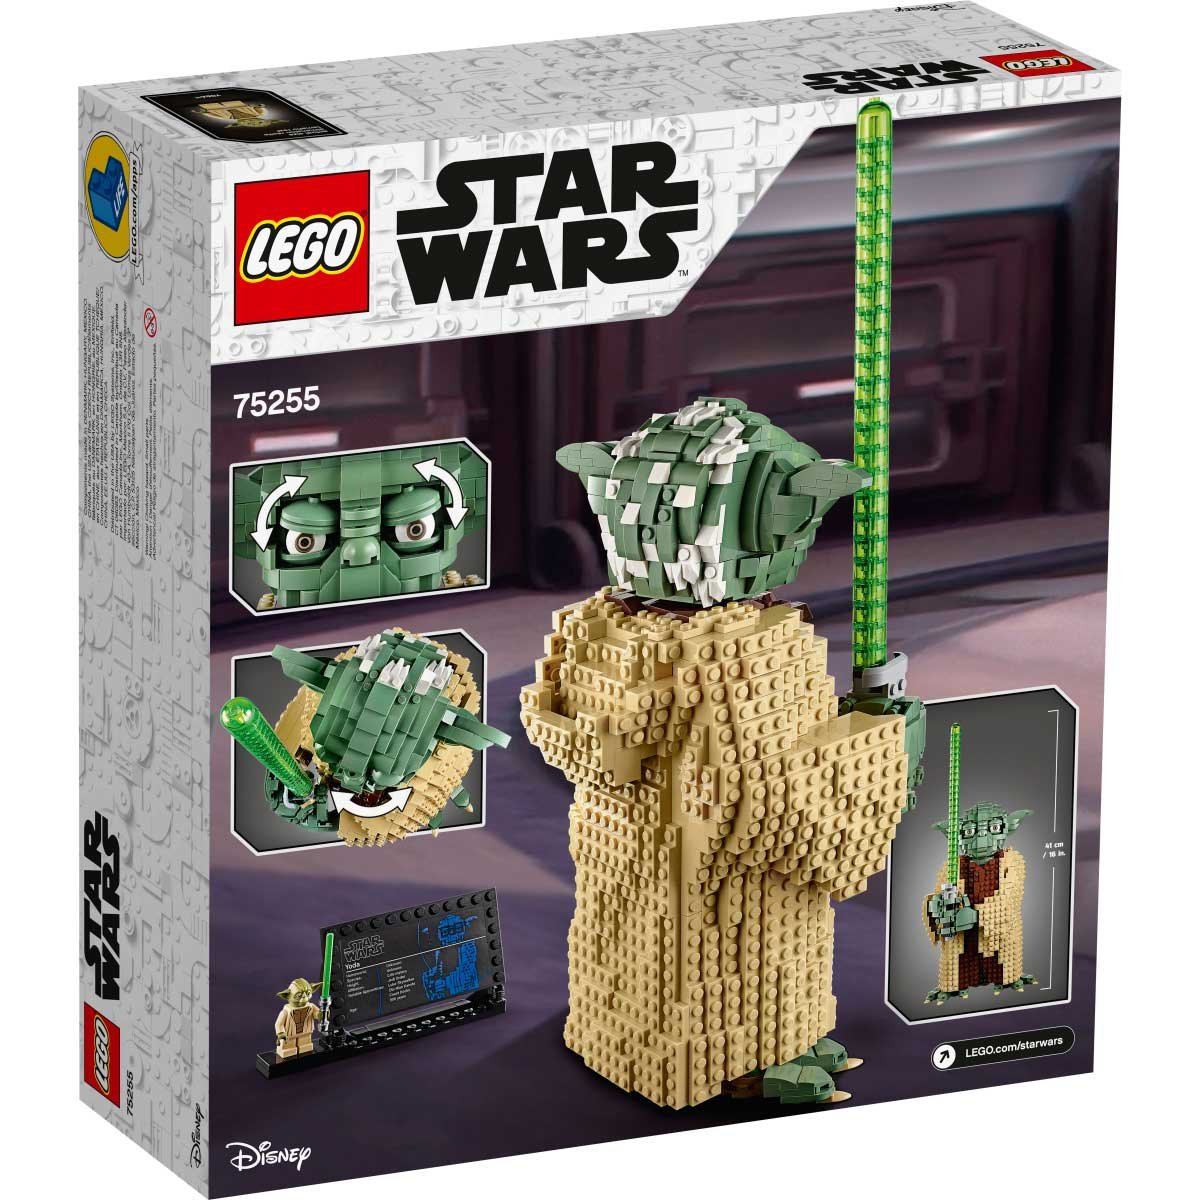 Yoda™ Star Wars Lego